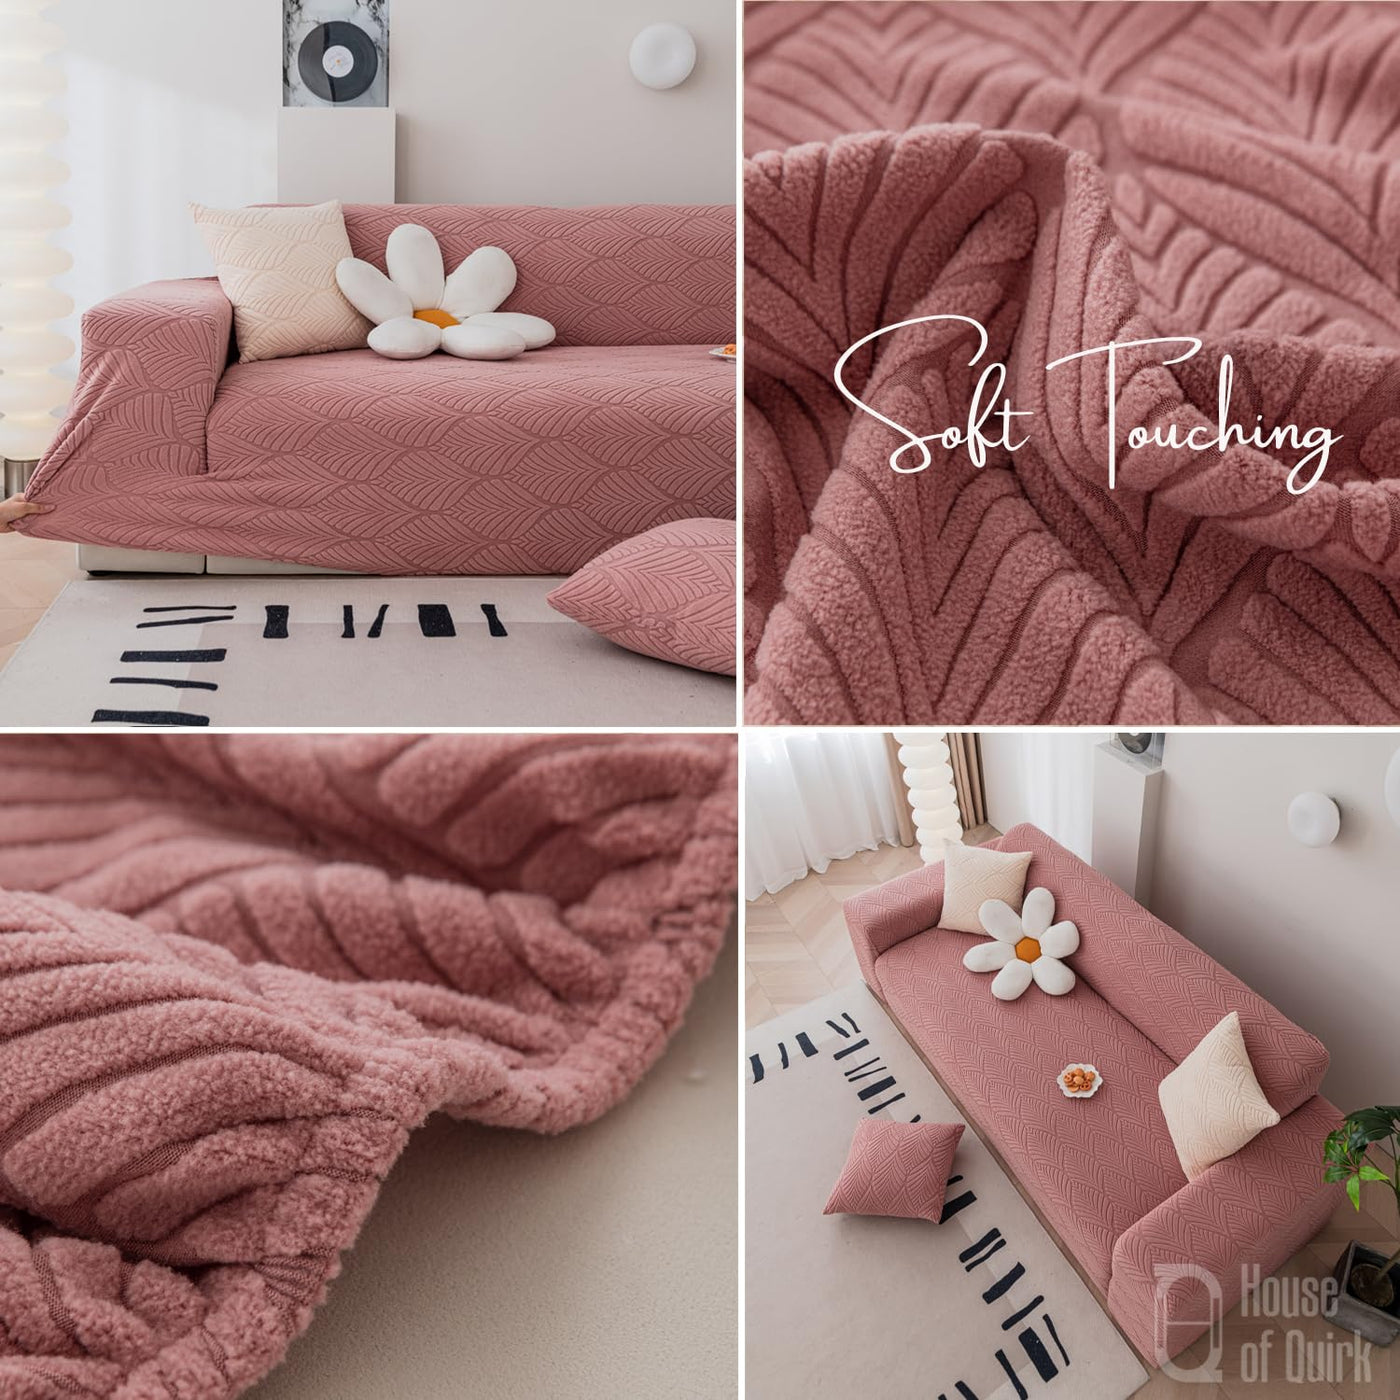 Universal Jacquard Leaf Texture Fabric Sofa Cover-Pink